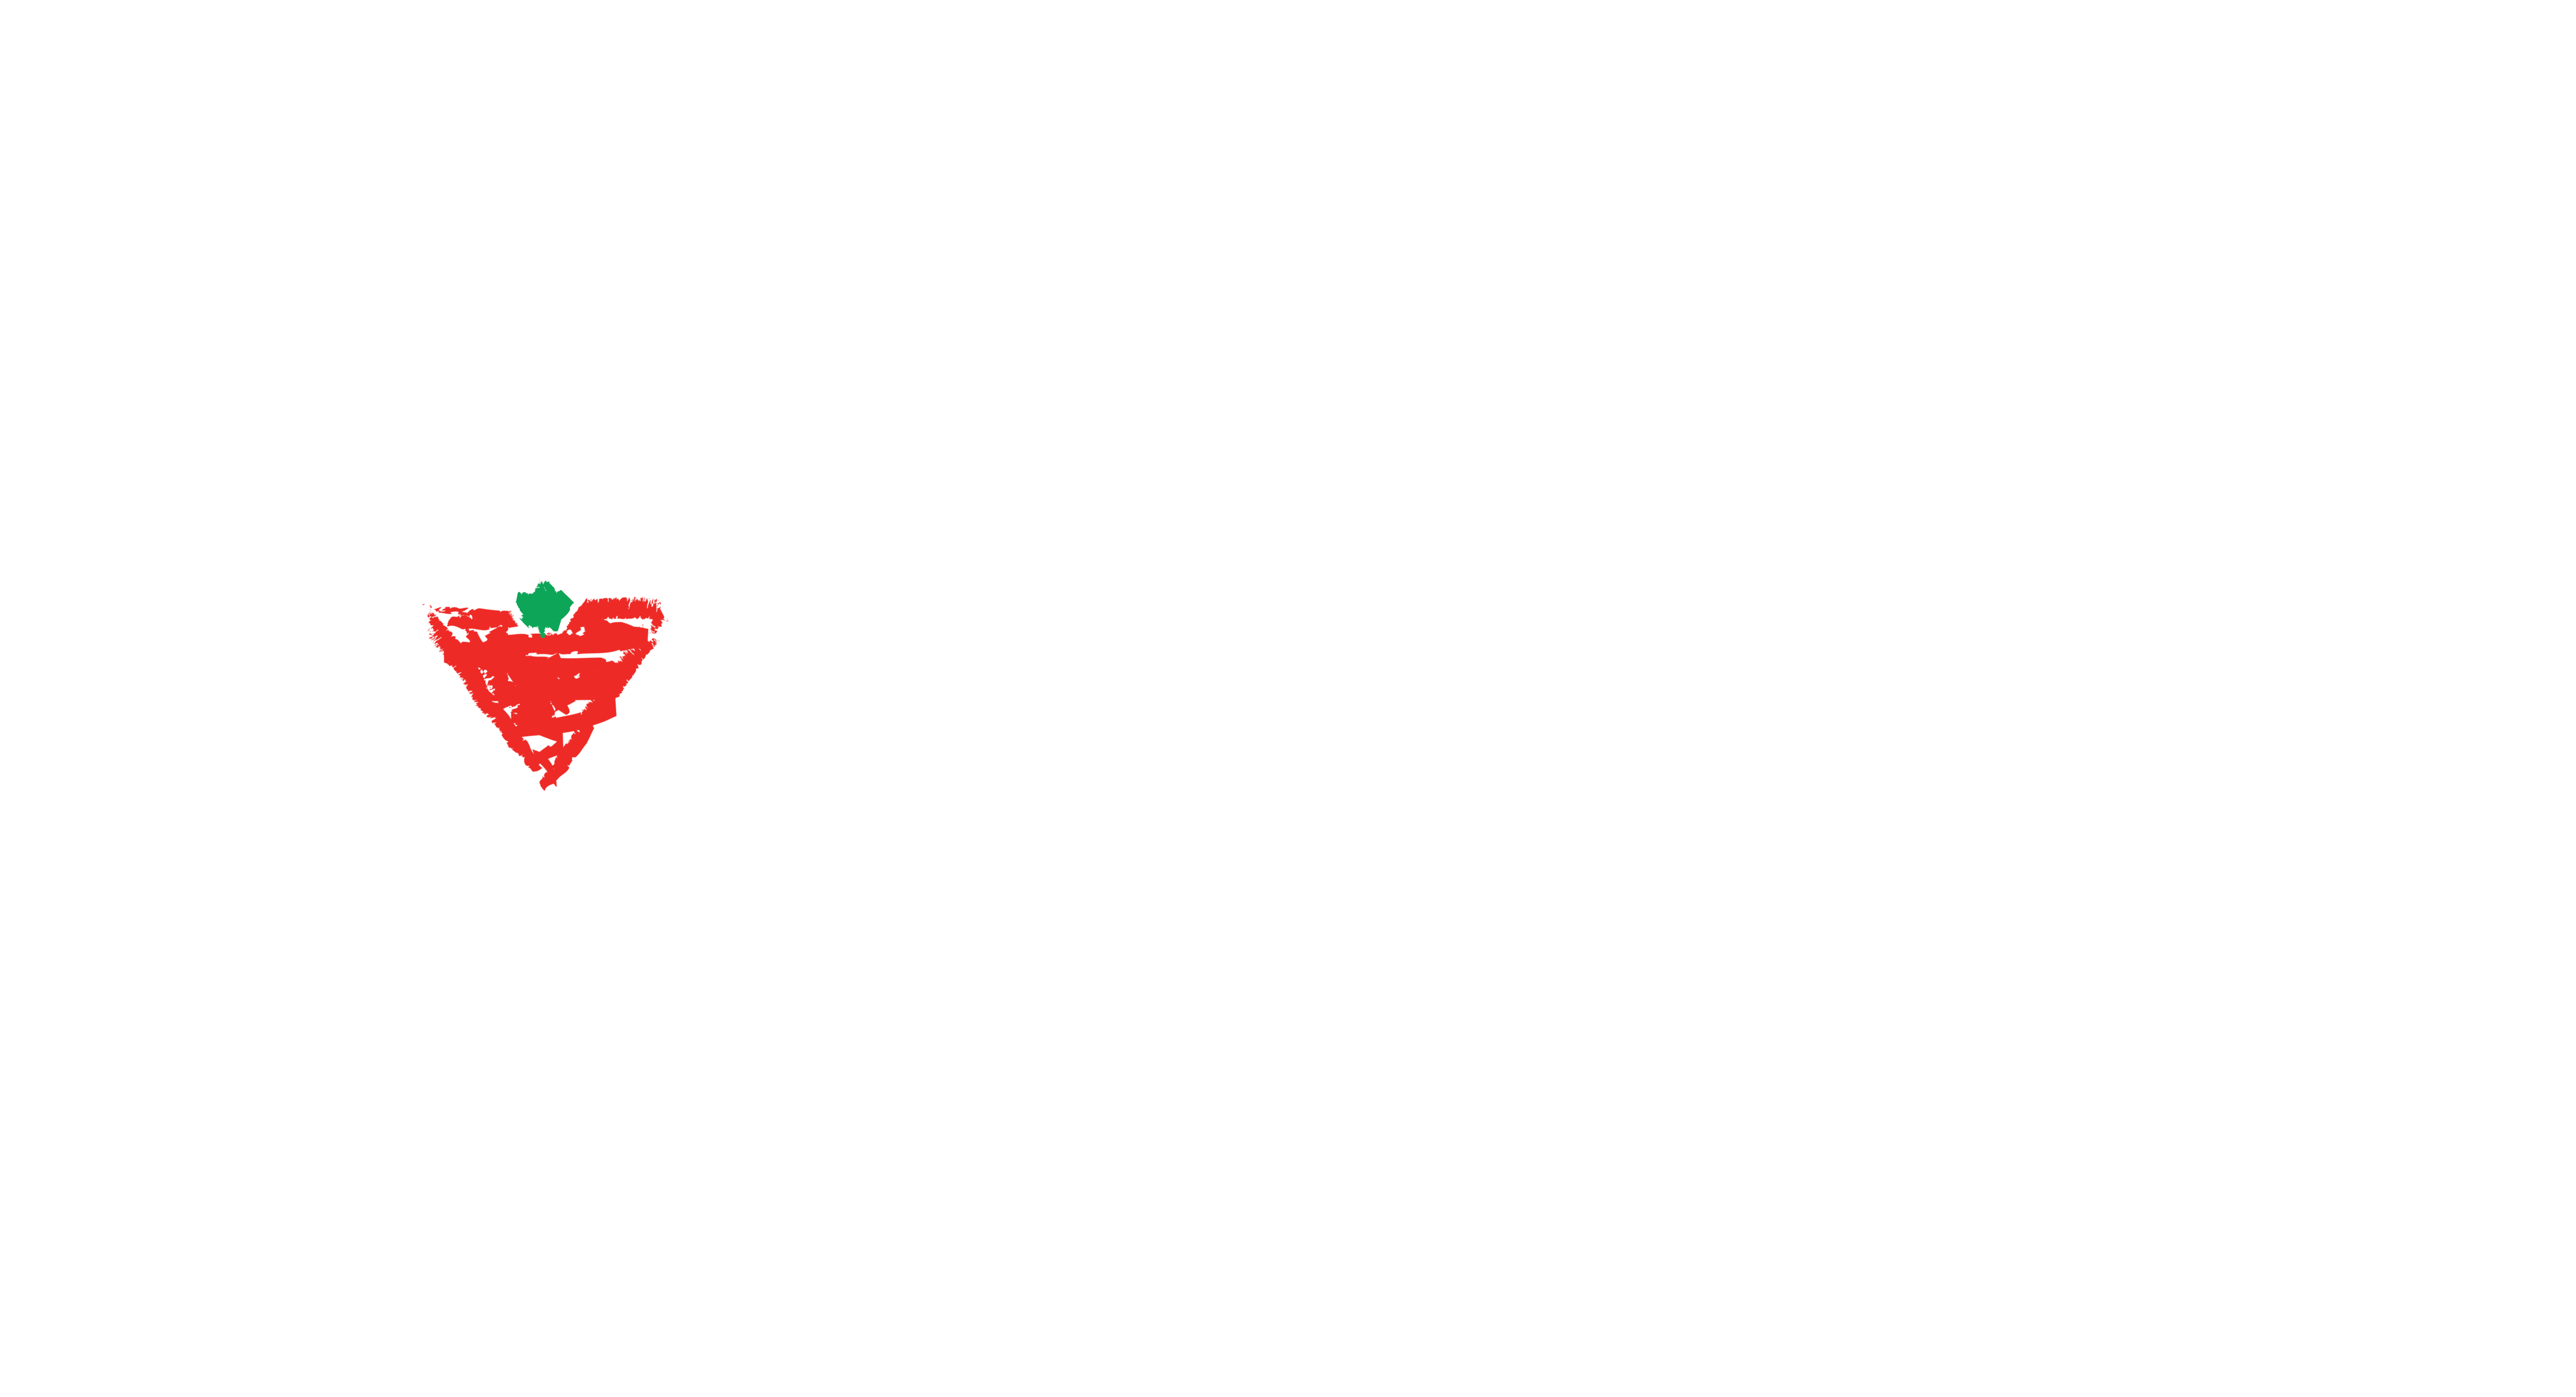 Jumpstart: Play to Lead